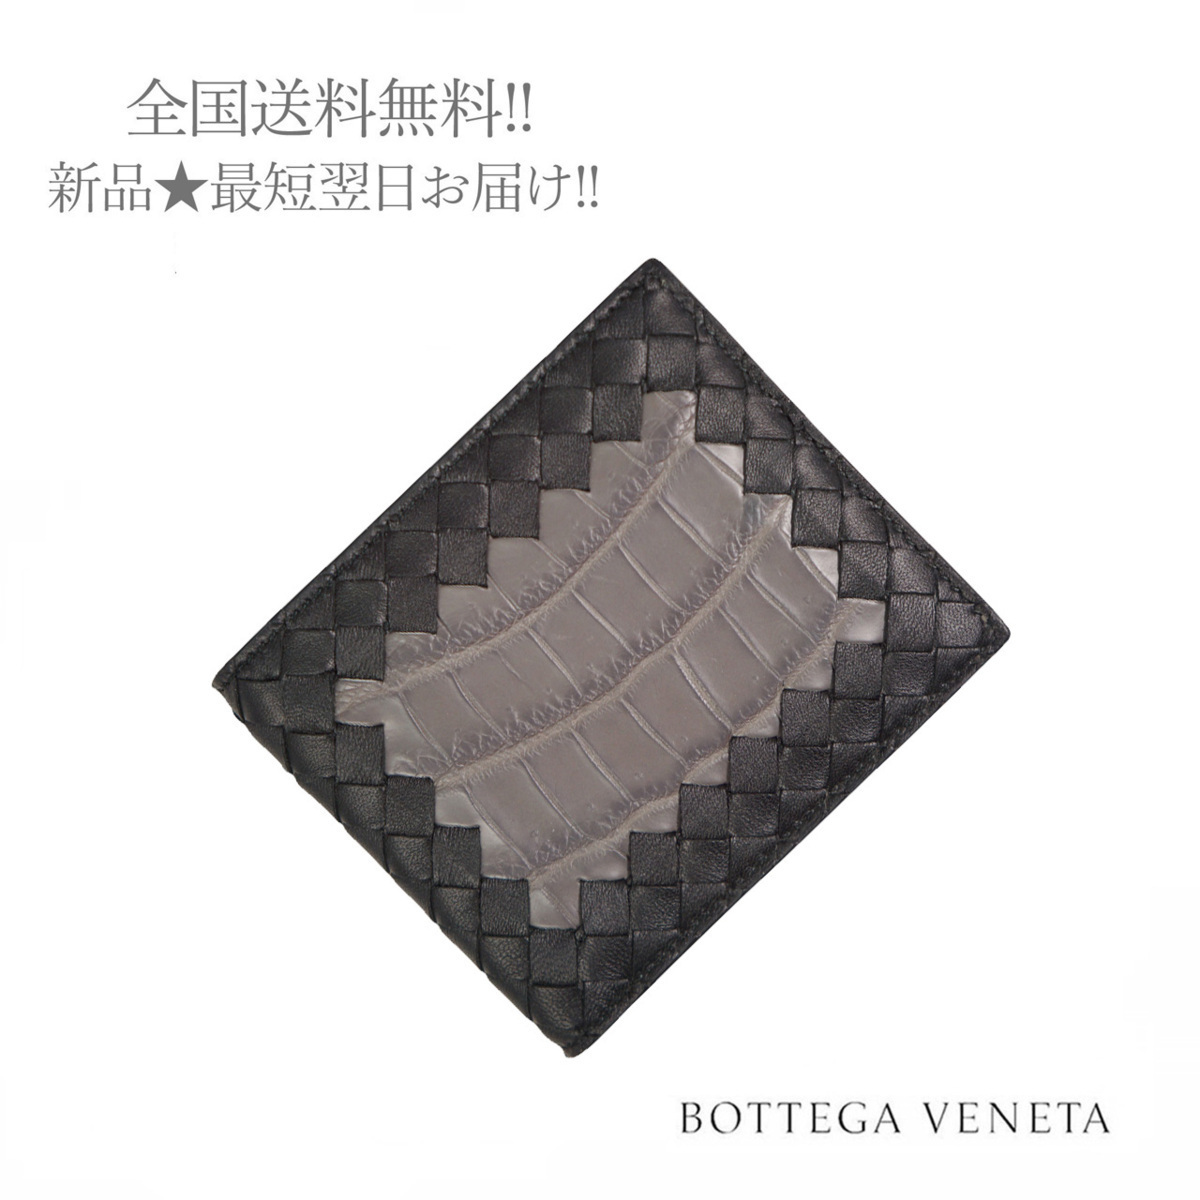 I352 BOTTEGA VENETA ボッテガヴェネタ イタリア製 2つ折り財布 イントレ x リアルクロコ メンズ 新品 ★ 8898 ブラック x グレー